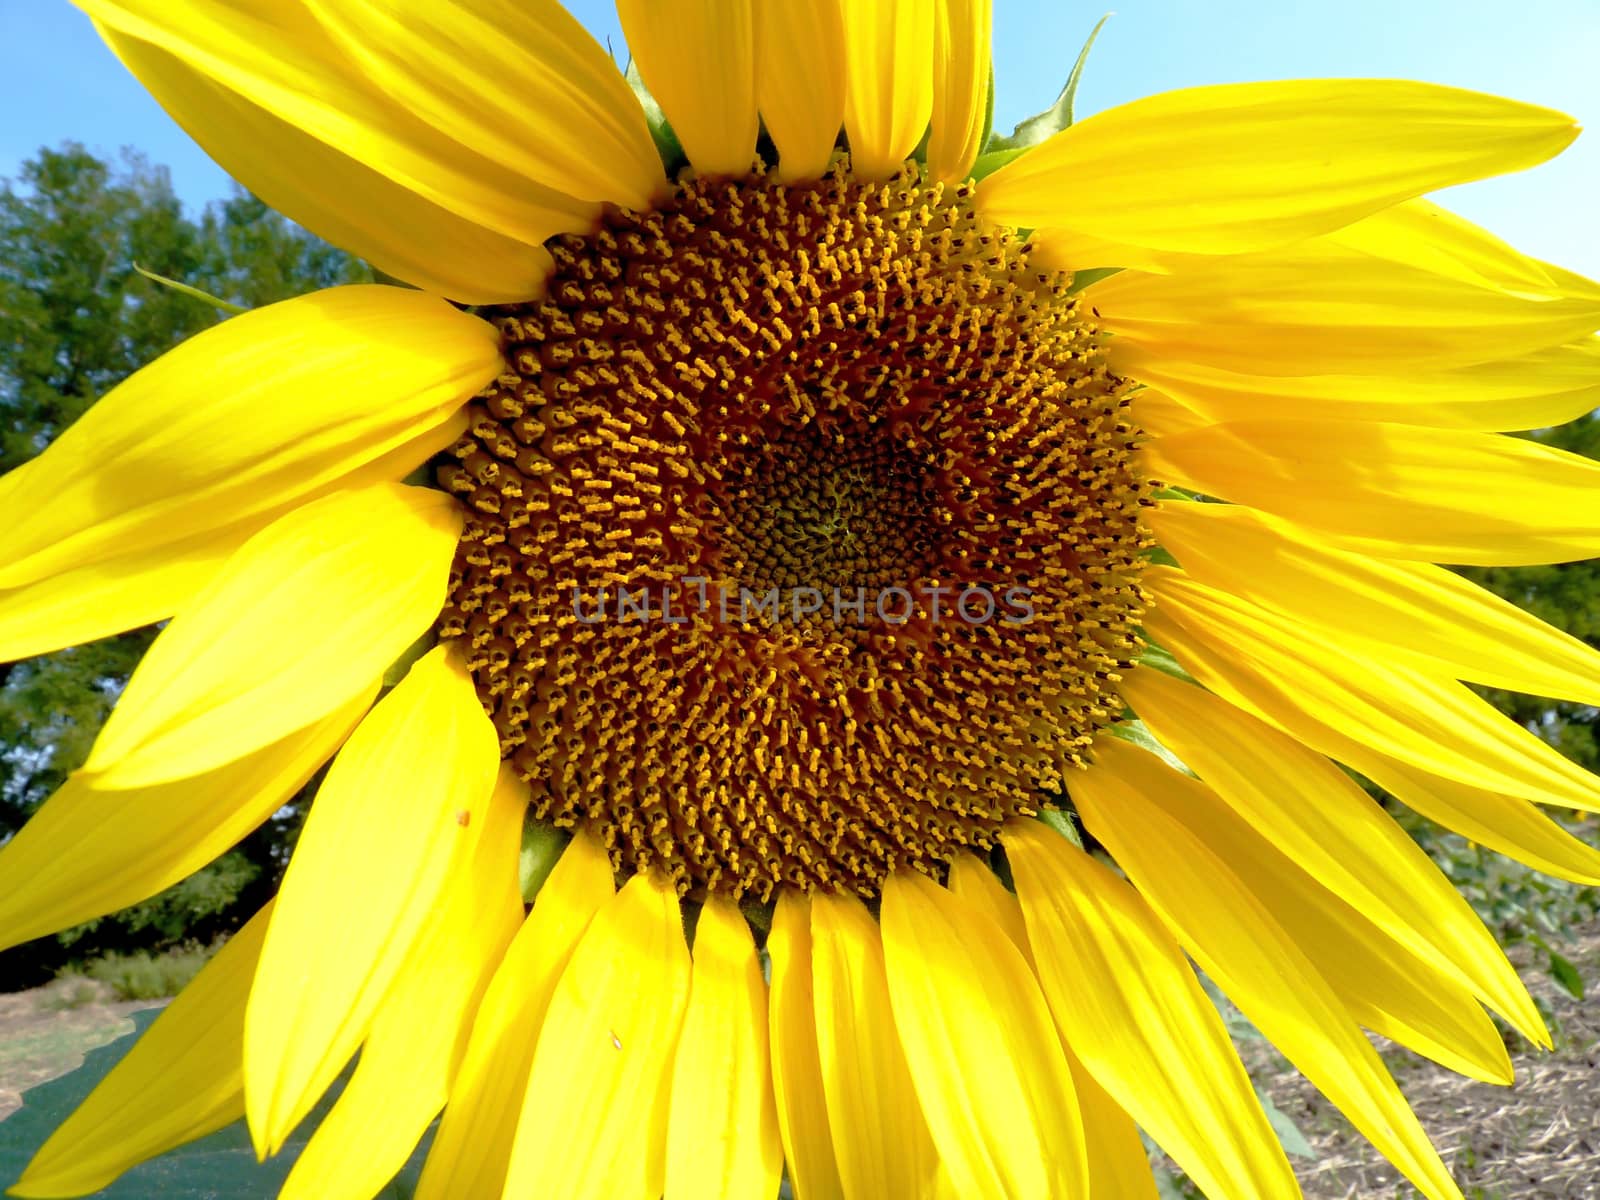 Sunflower core by Vadimdem